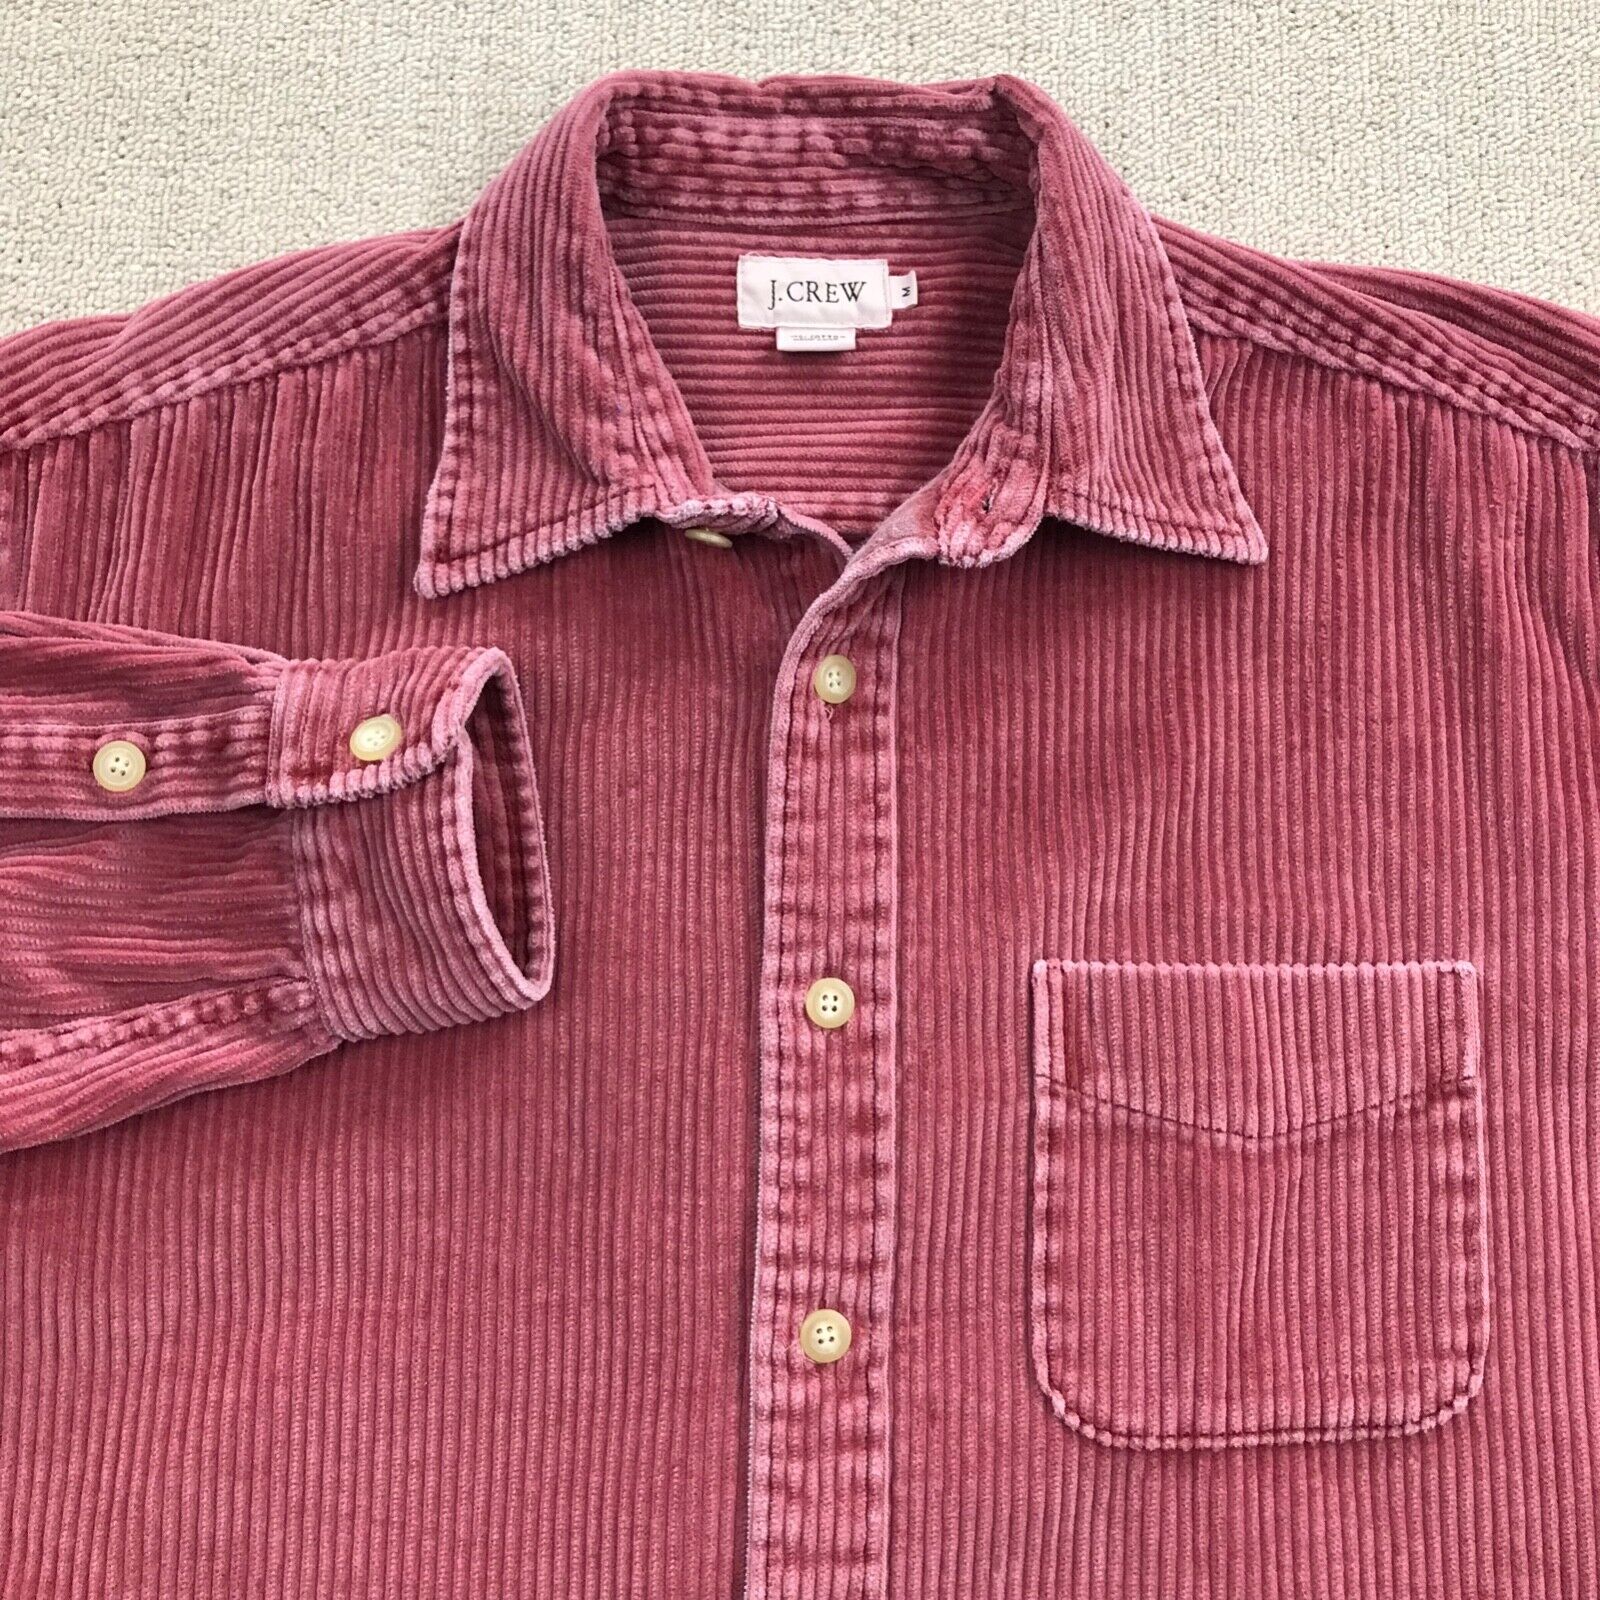 Vintage J Crew Shirt Mens Medium Pink Wide Wale Corduroy Button Up Preppy Casual